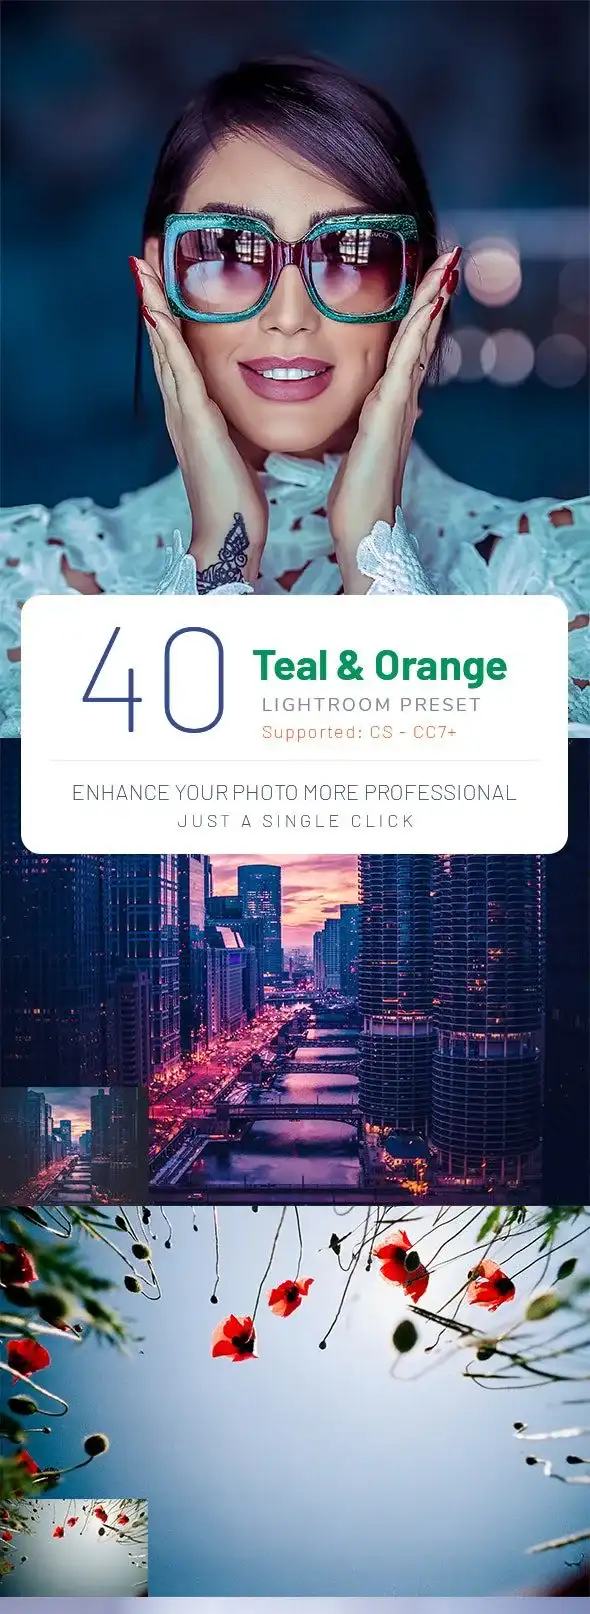 پریست لایتروم  40 Teal & Orange Lightroom Preset